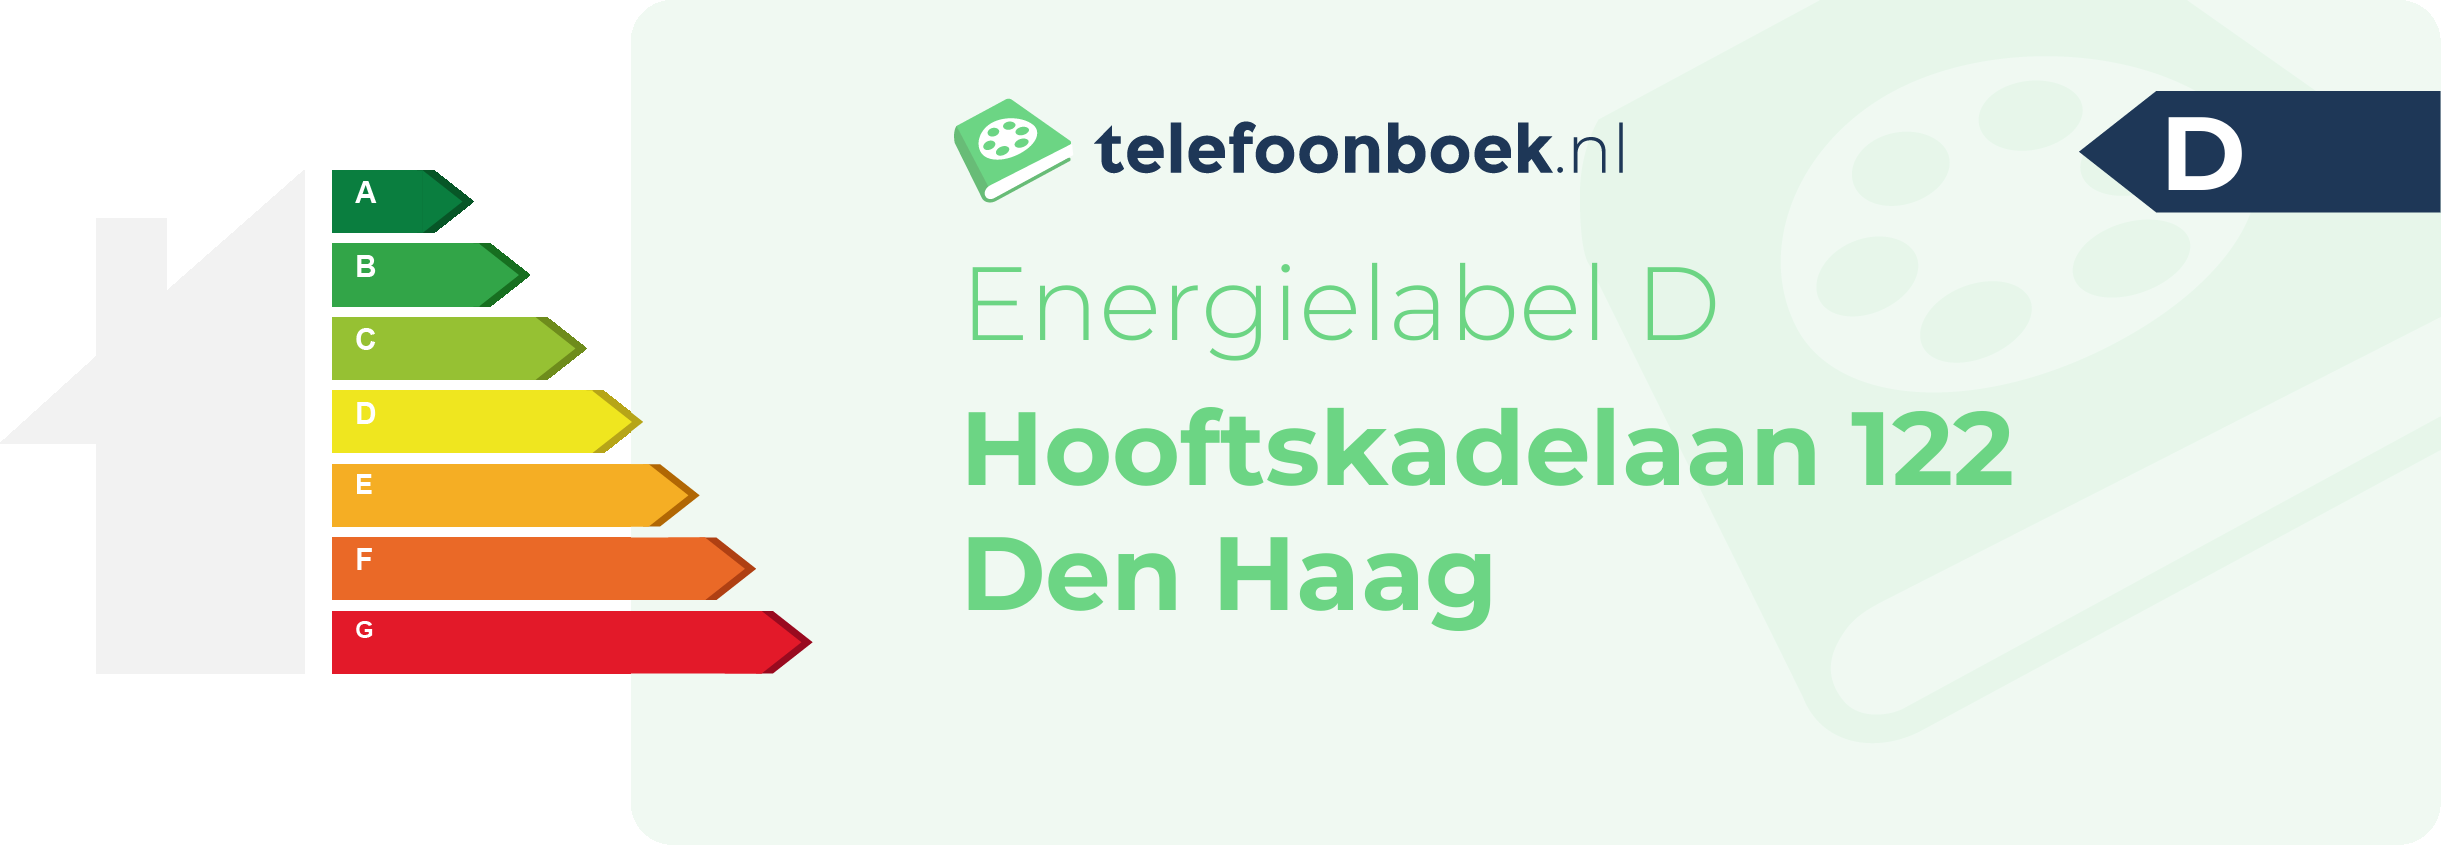 Energielabel Hooftskadelaan 122 Den Haag